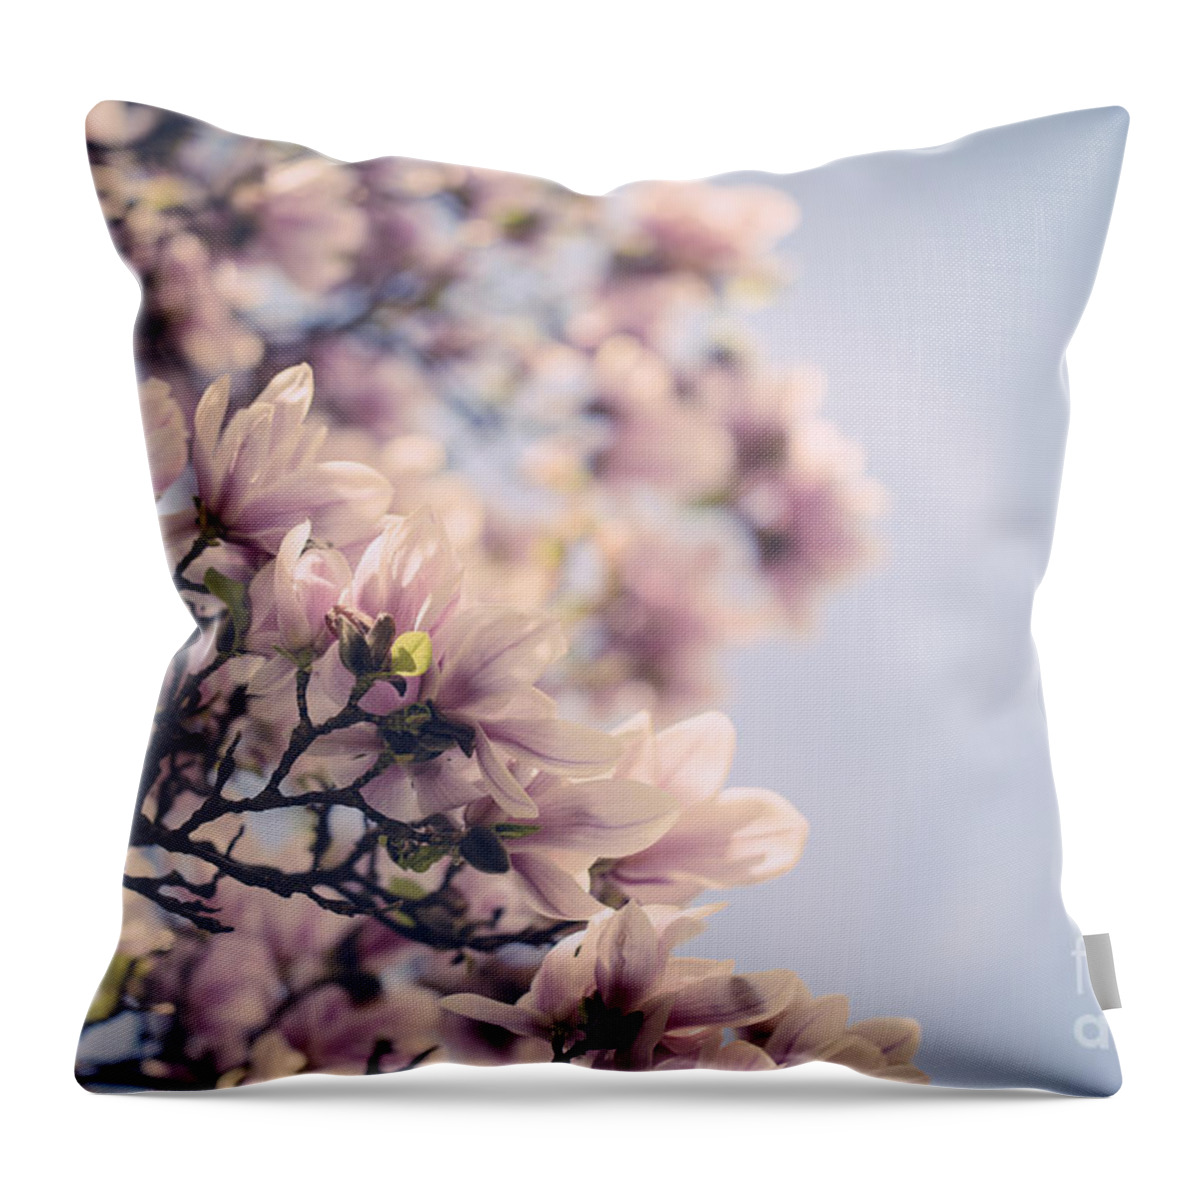 Magnolia Throw Pillow featuring the photograph Magnolia Flowers by Nailia Schwarz